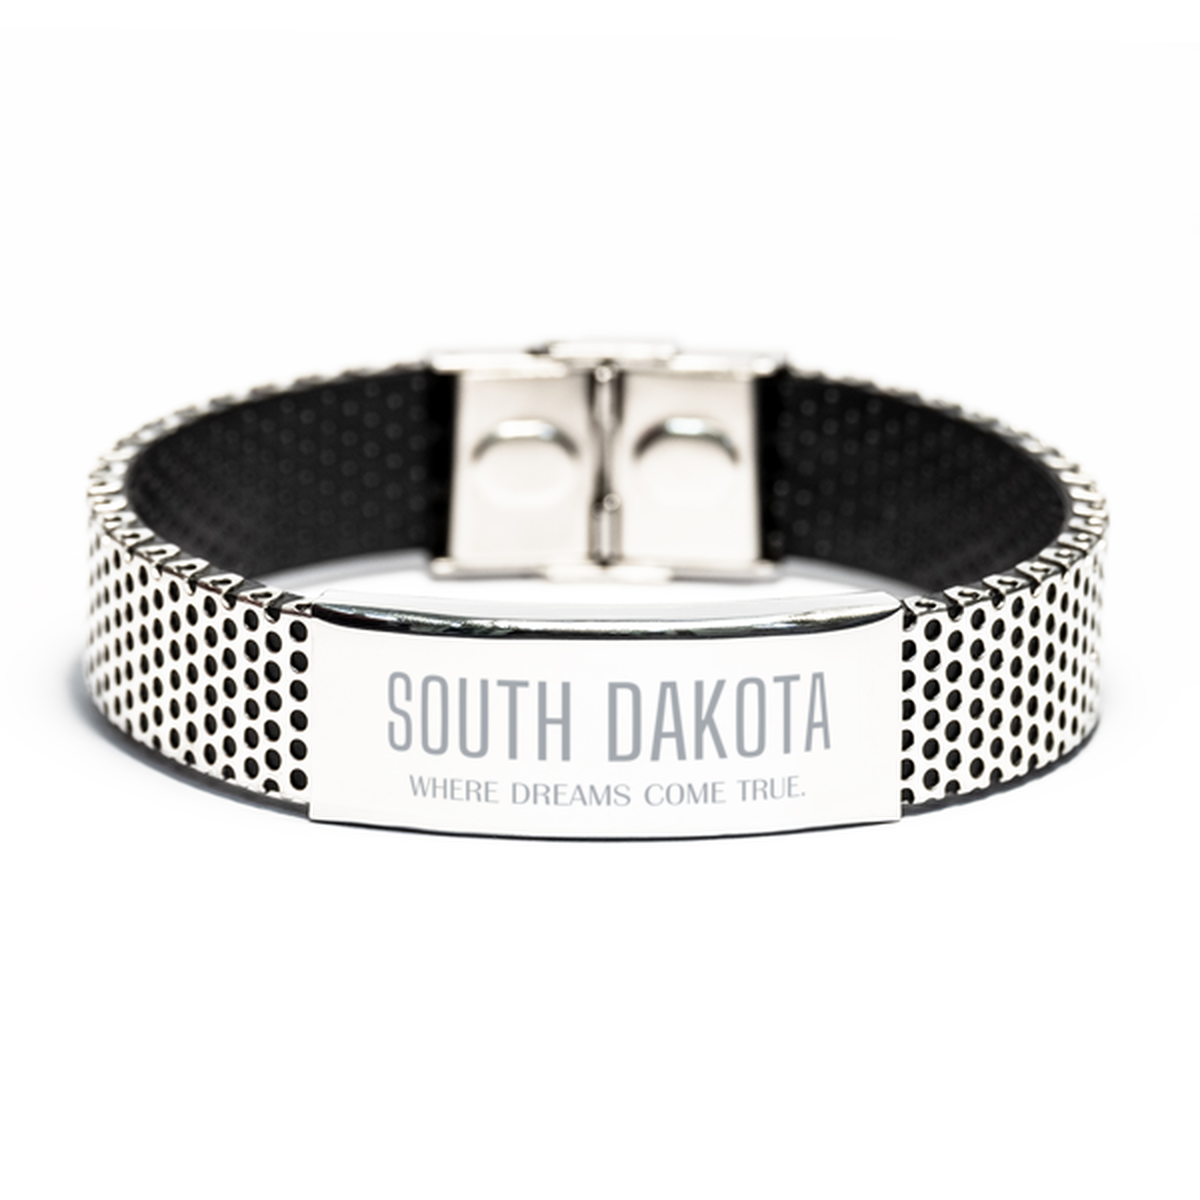 Love South Dakota State Stainless Steel Bracelet, South Dakota Where dreams come true, Birthday Inspirational Gifts For South Dakota Men, Women, Friends